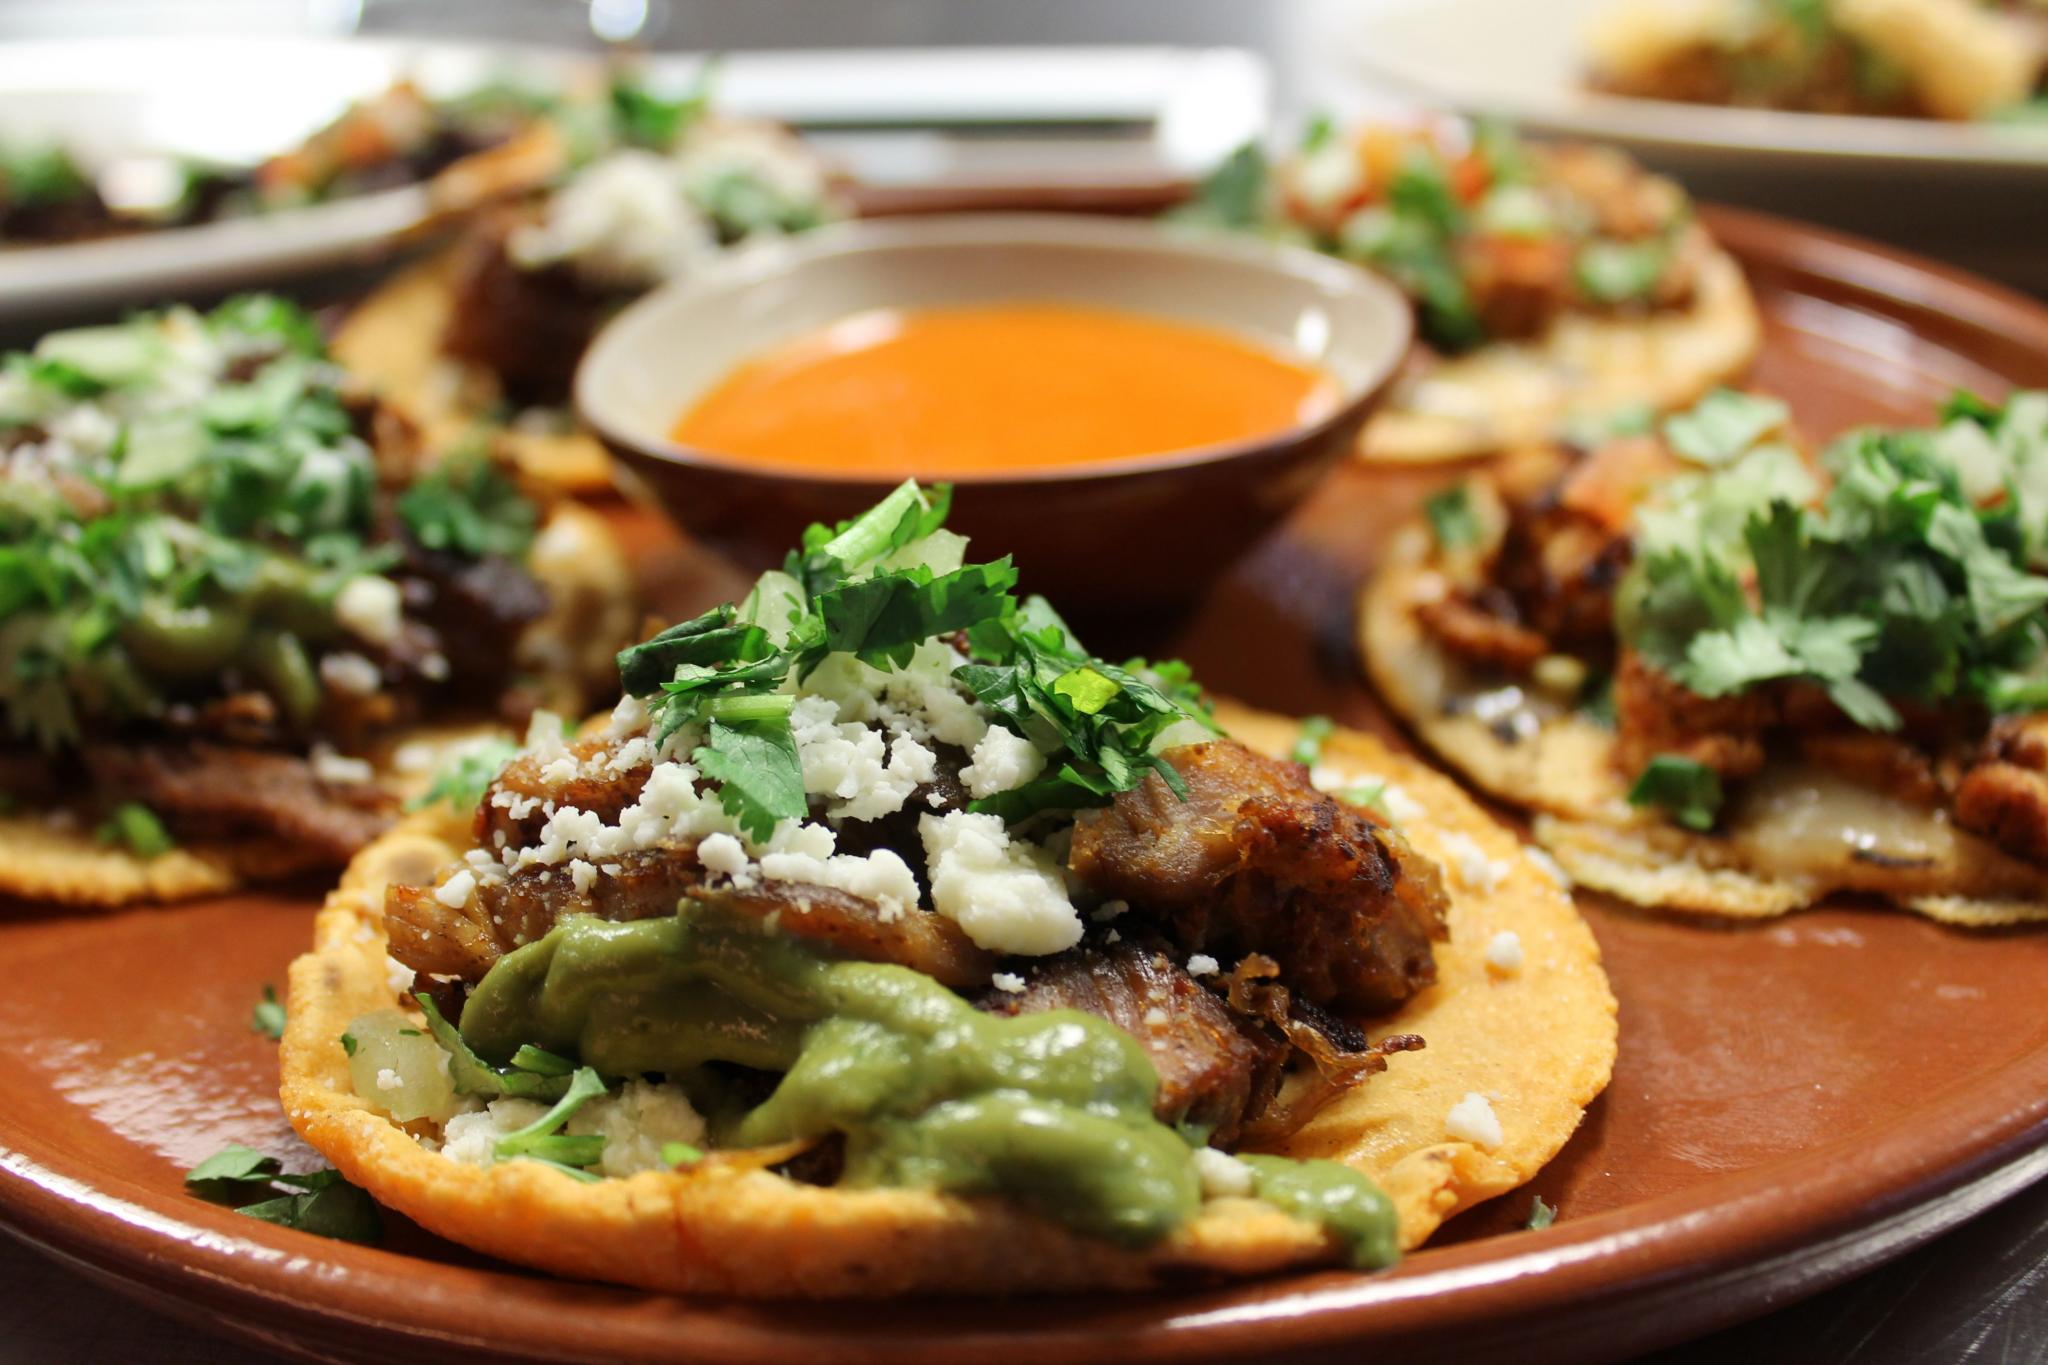 Plated mini tacos with guacamole, cilantro, roasted pork, and queso fresco. 